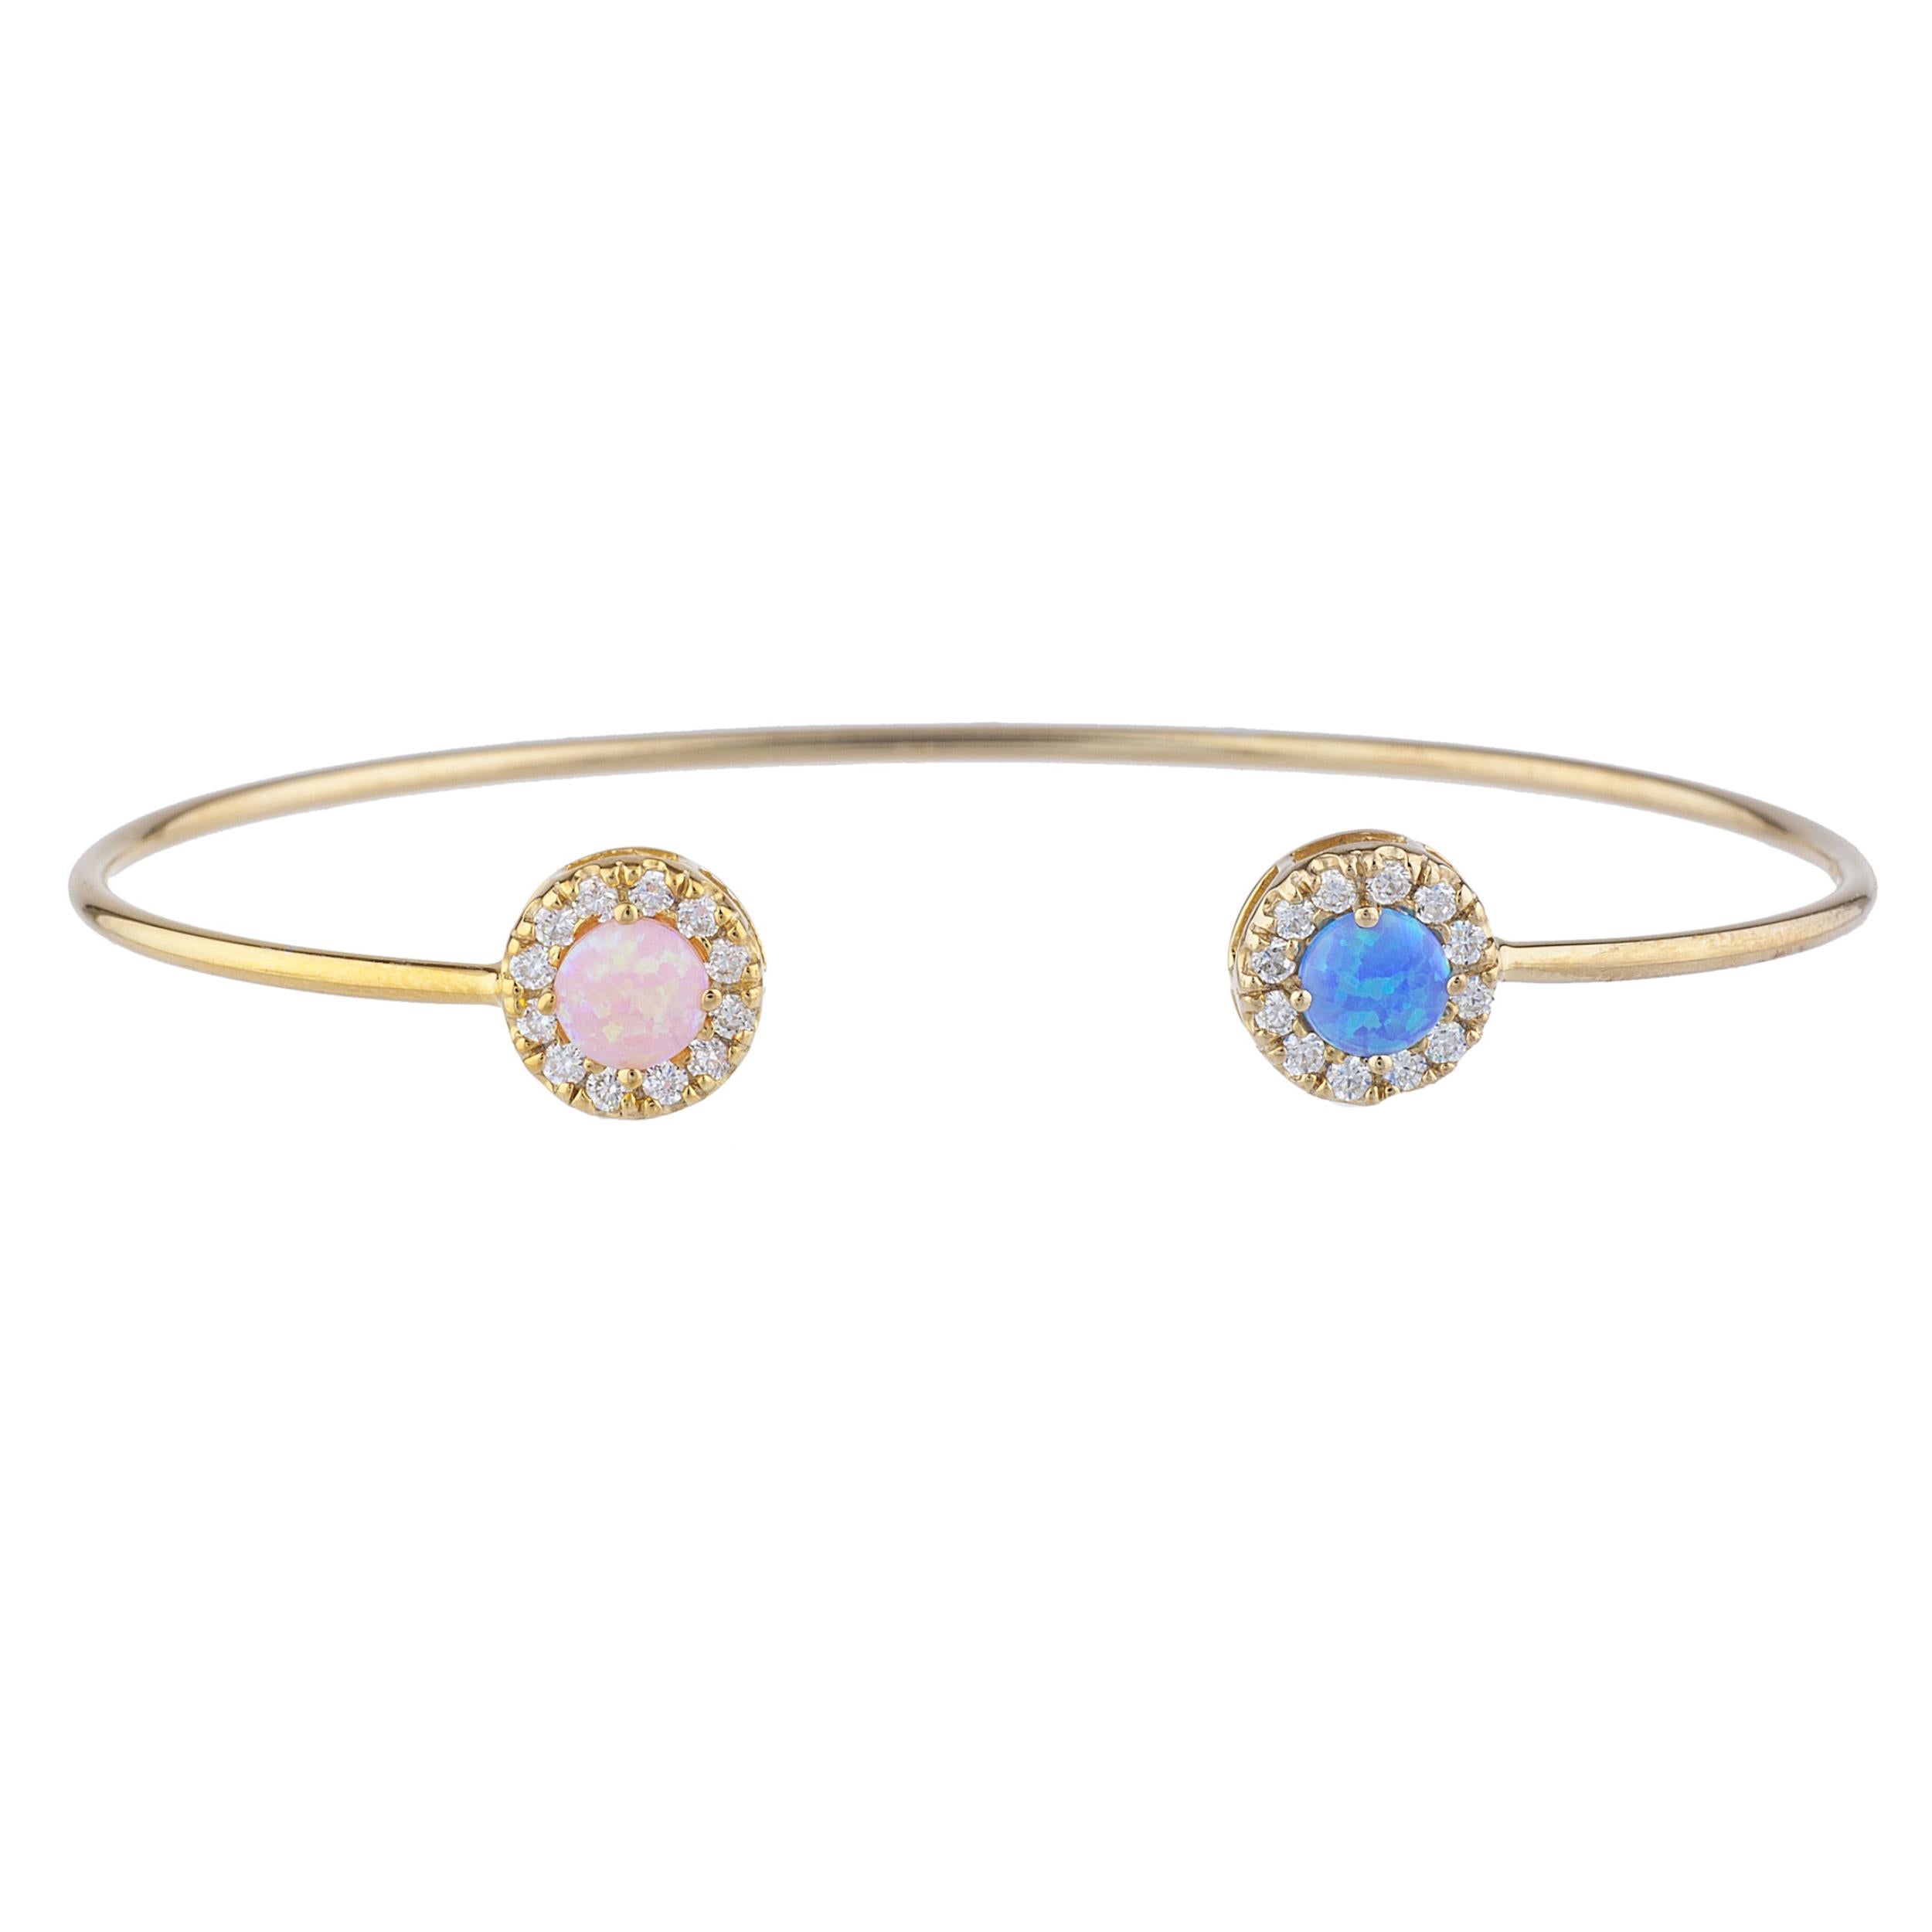 Blue & Pink Opal Halo Design Round Bangle Bracelet 14Kt Yellow Gold Rose Gold Silver